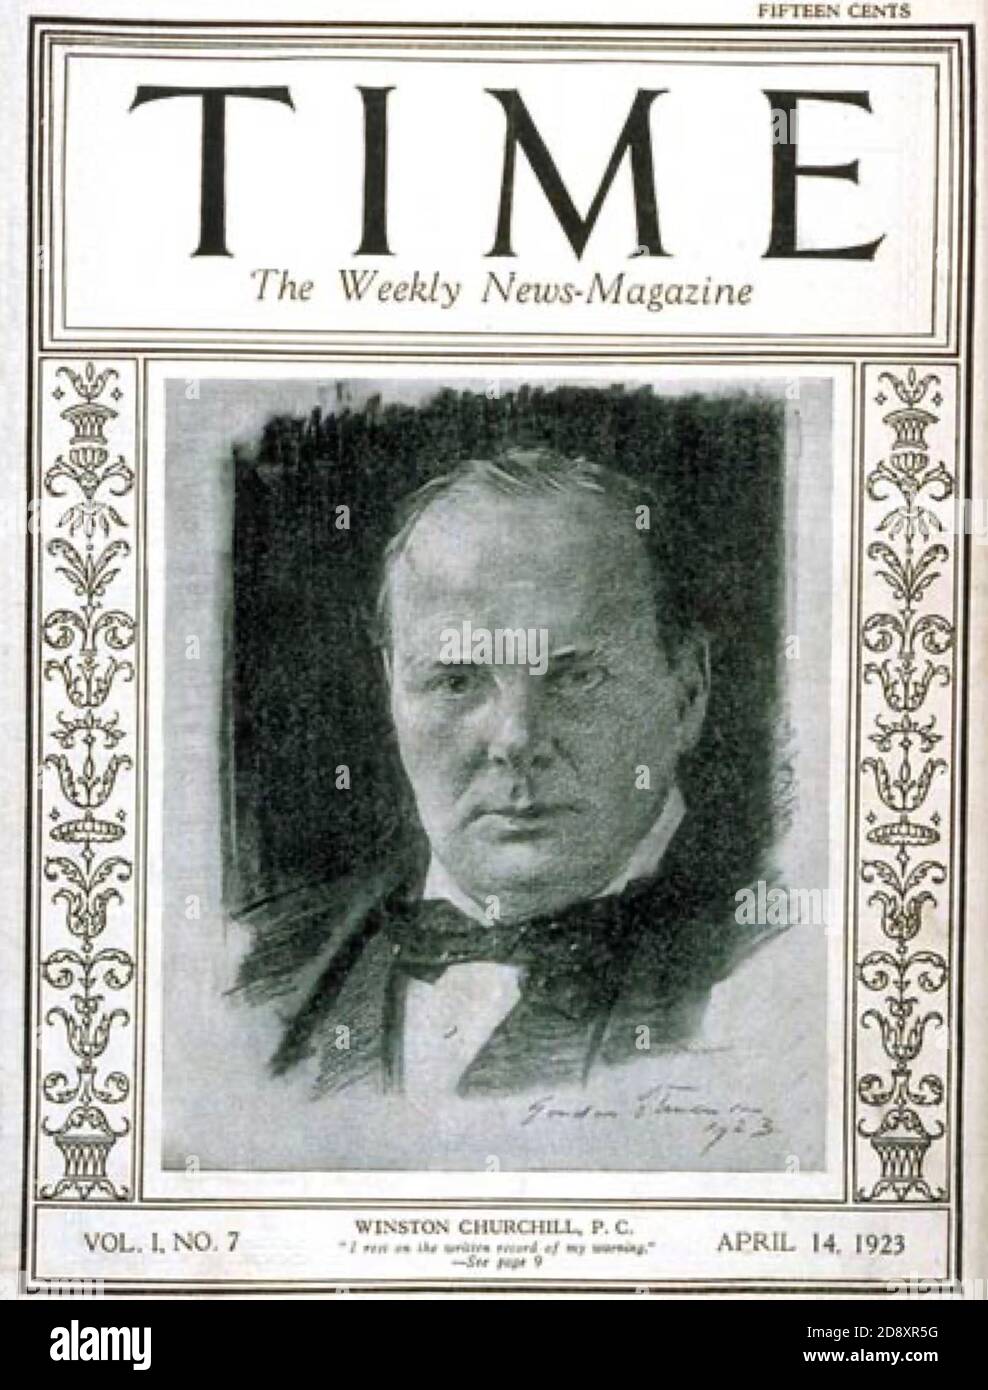 Copertina del Time Magazine - Winfont Churchill Foto Stock